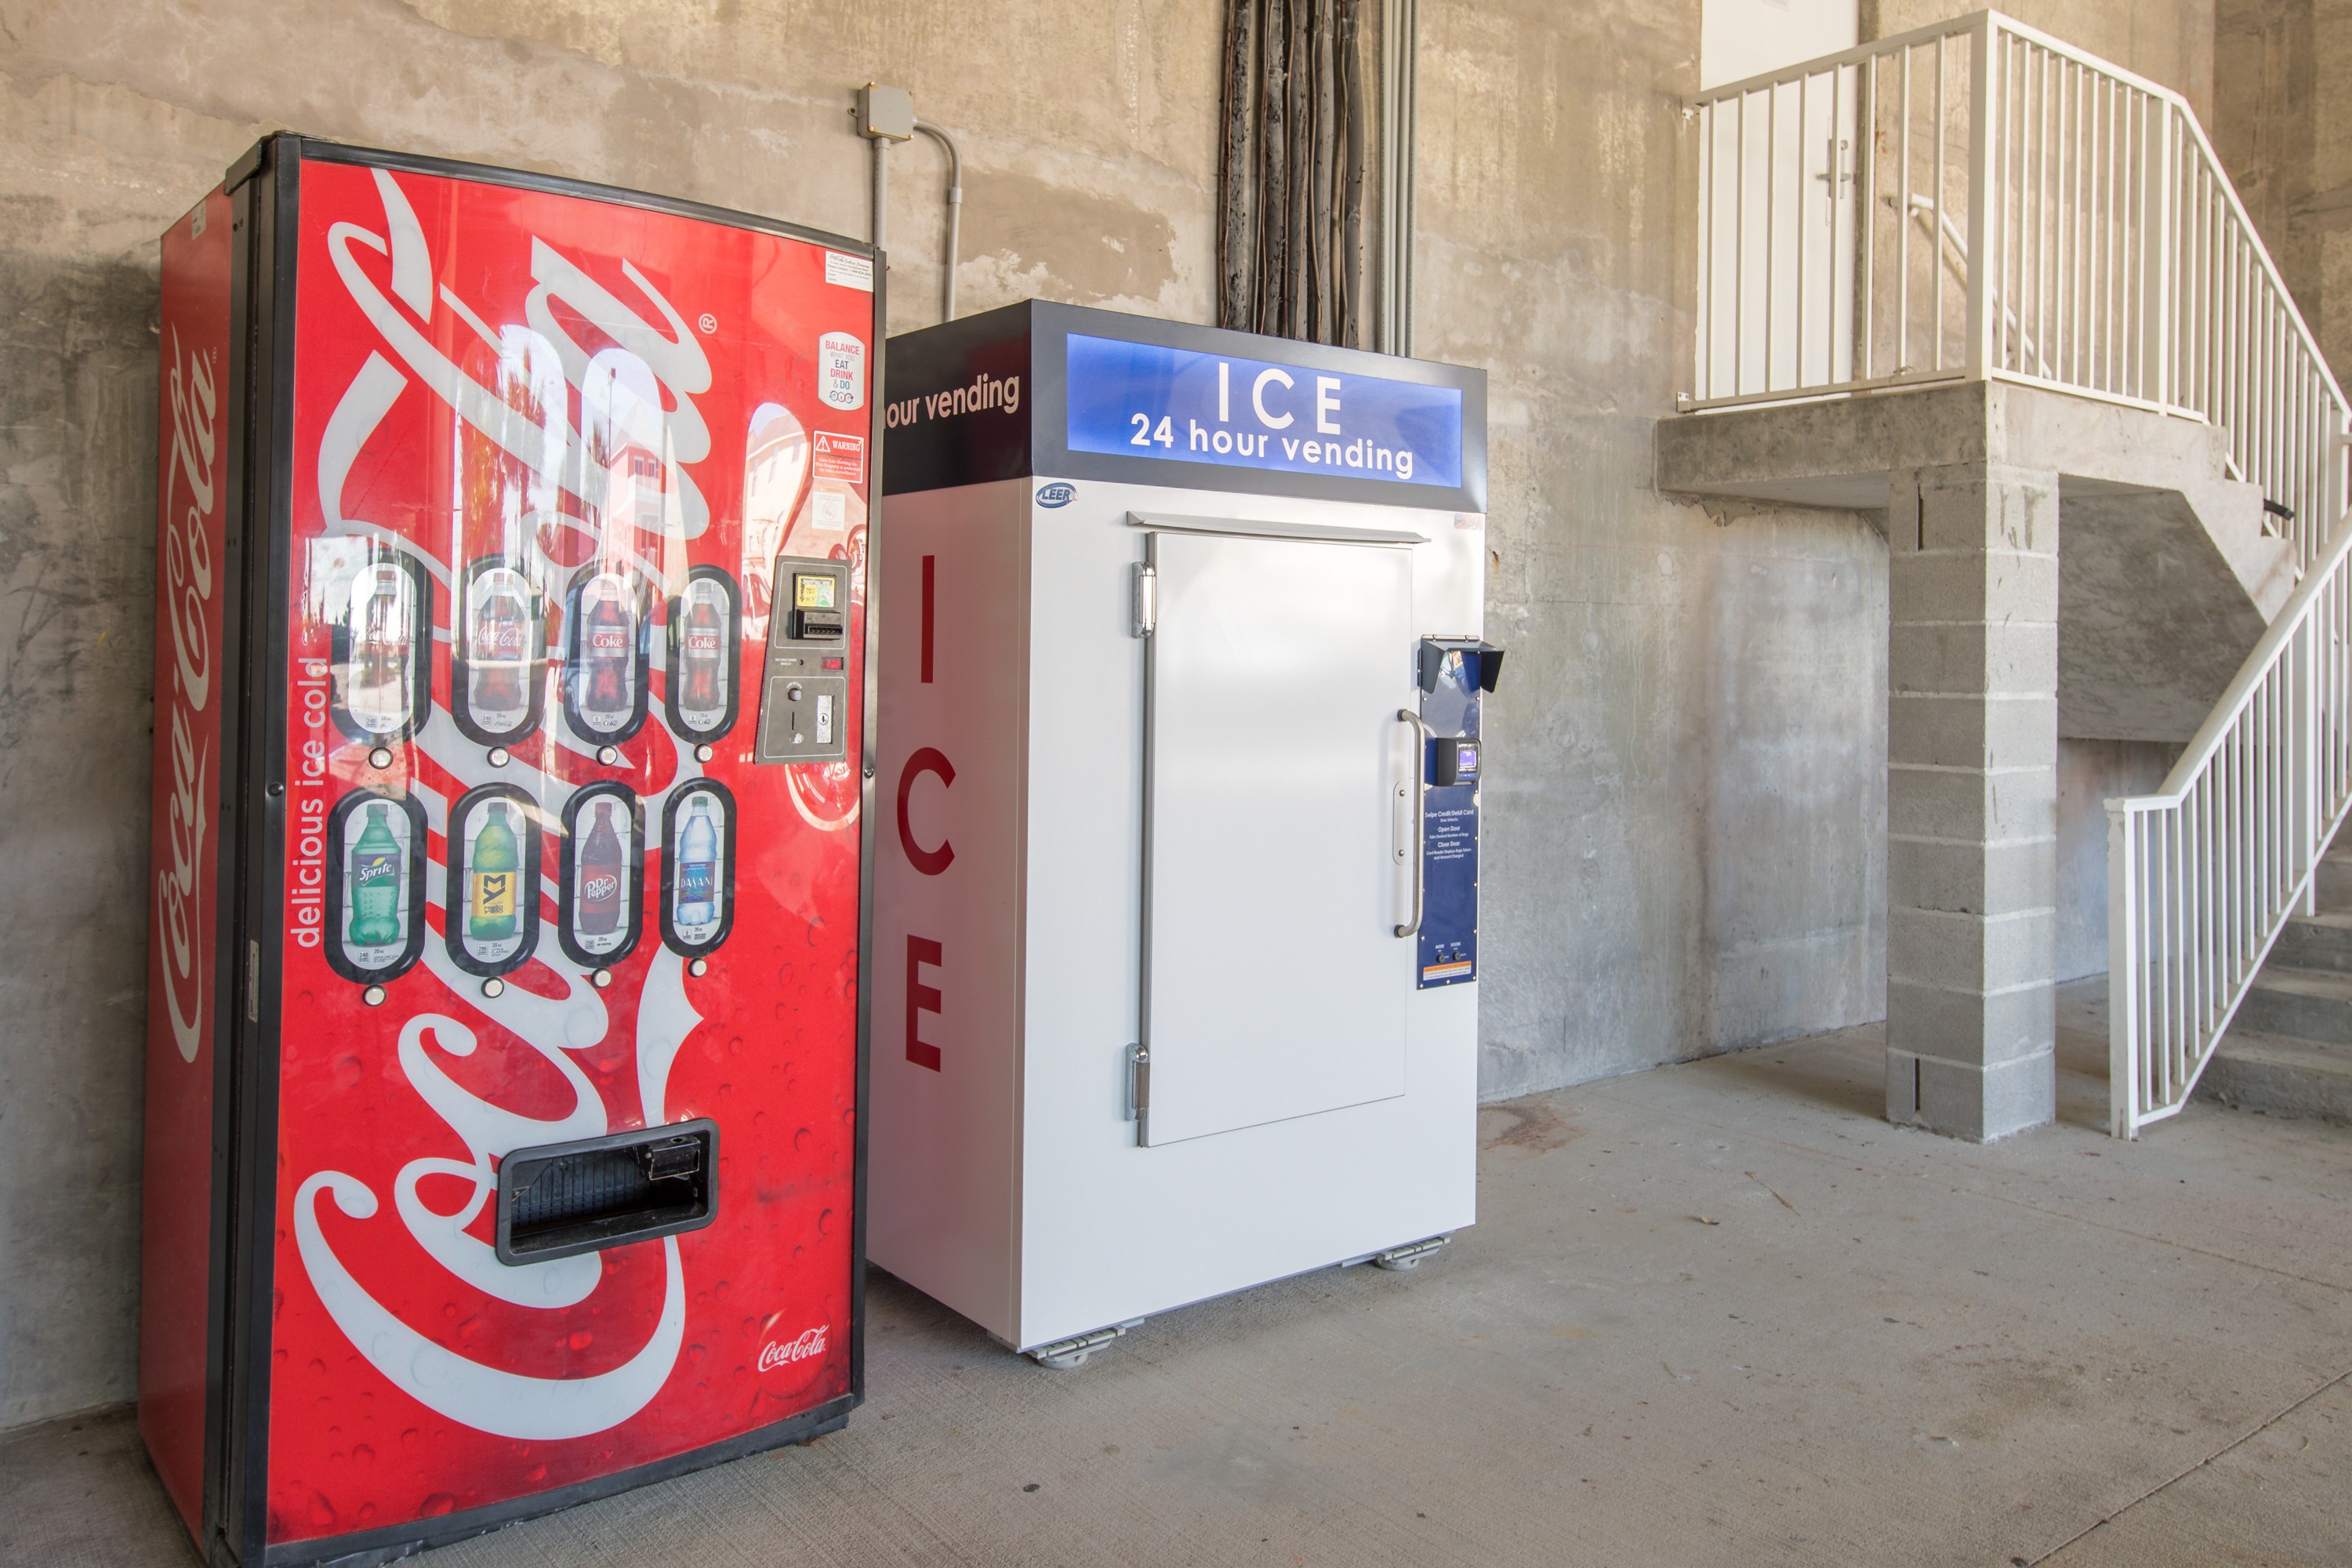 Ice & soda machine - located on the main floor near the elevators.